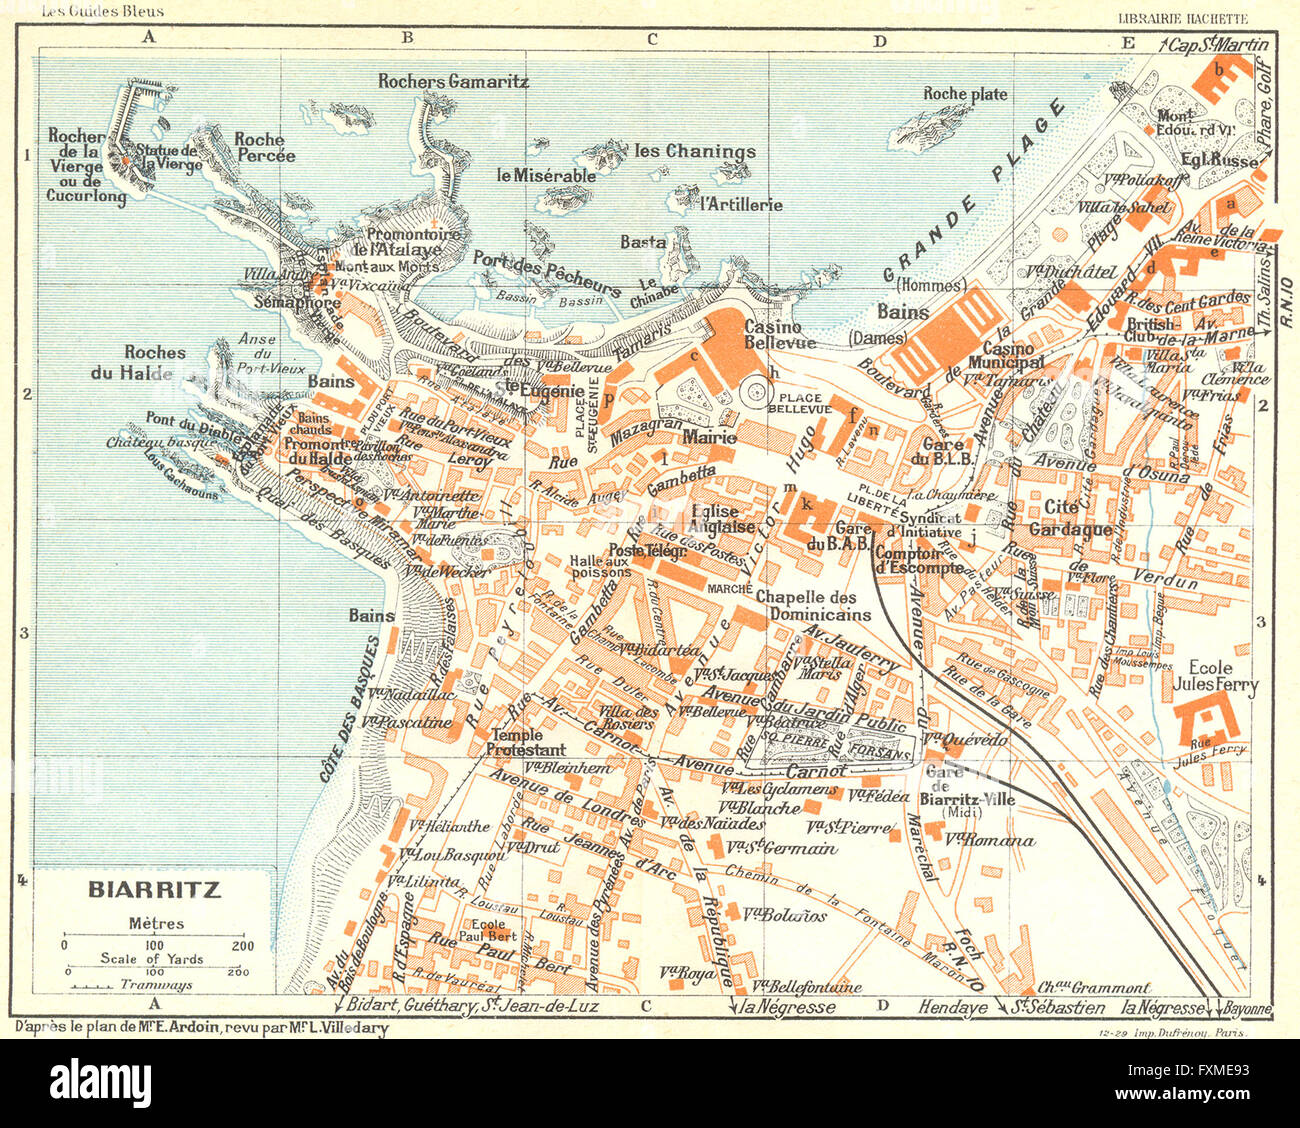 FRANCE: Biarritz, 1926 vintage map Stock Photo